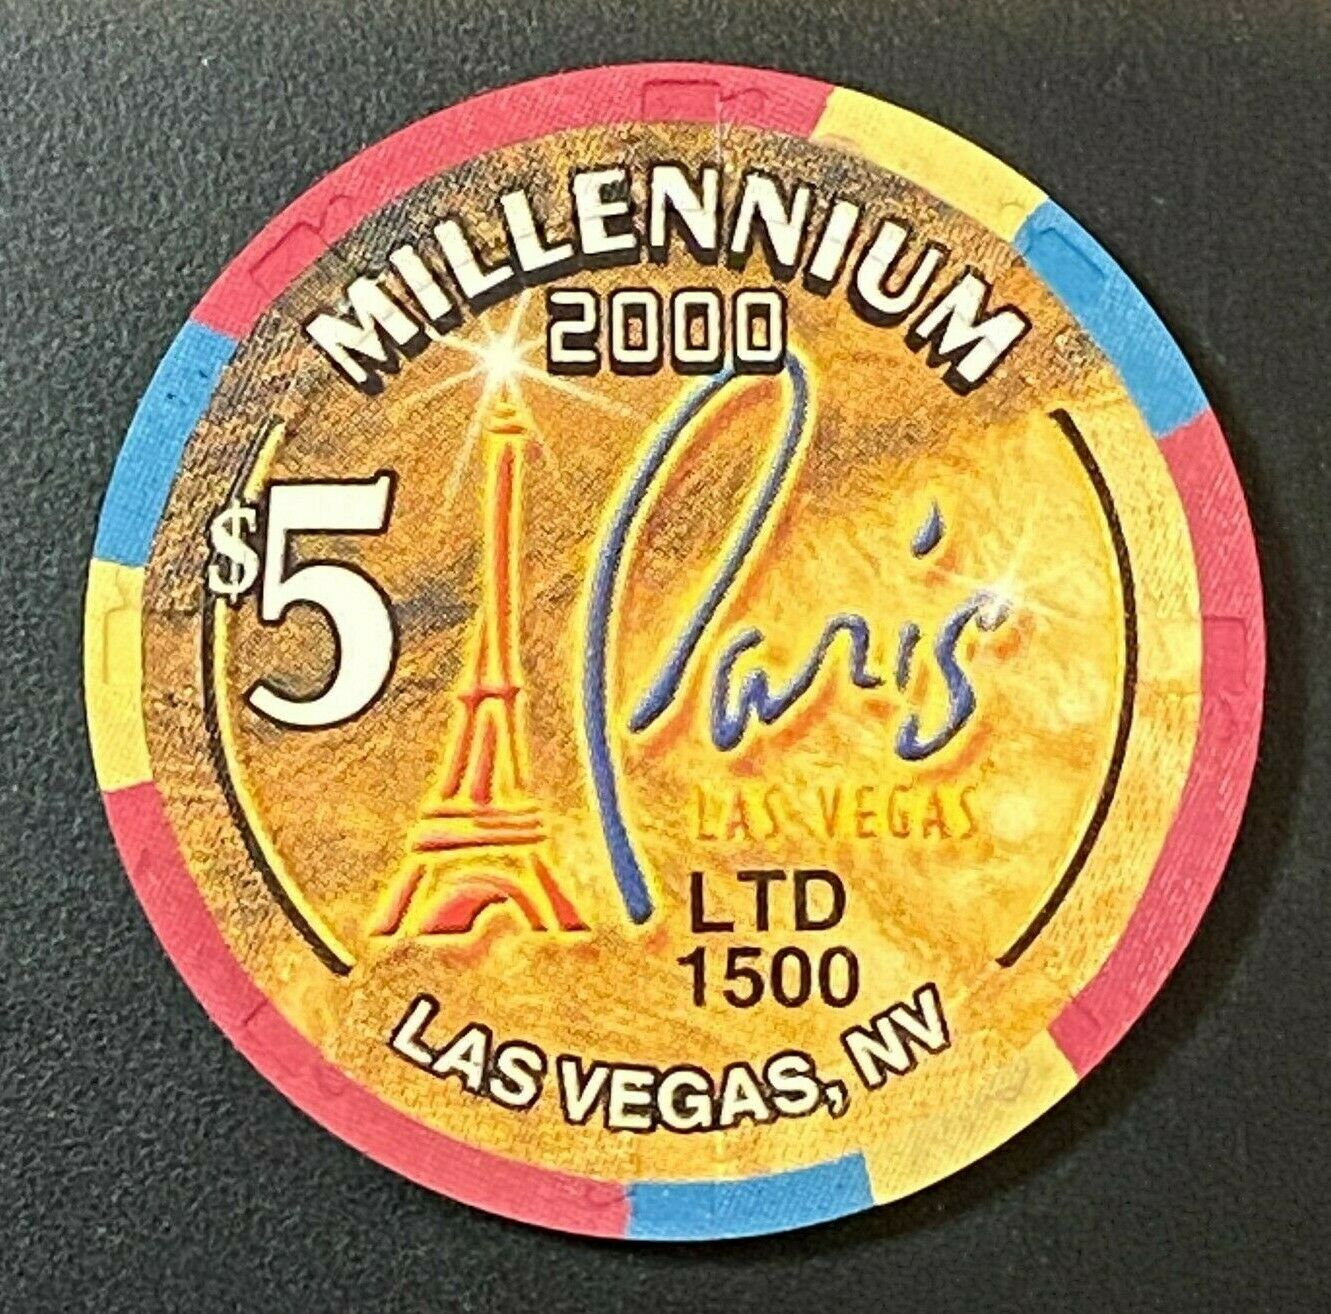 Paris Casino $5 Casino Chip "millennium 2000" Limited Edition, Las Vegas, Nv